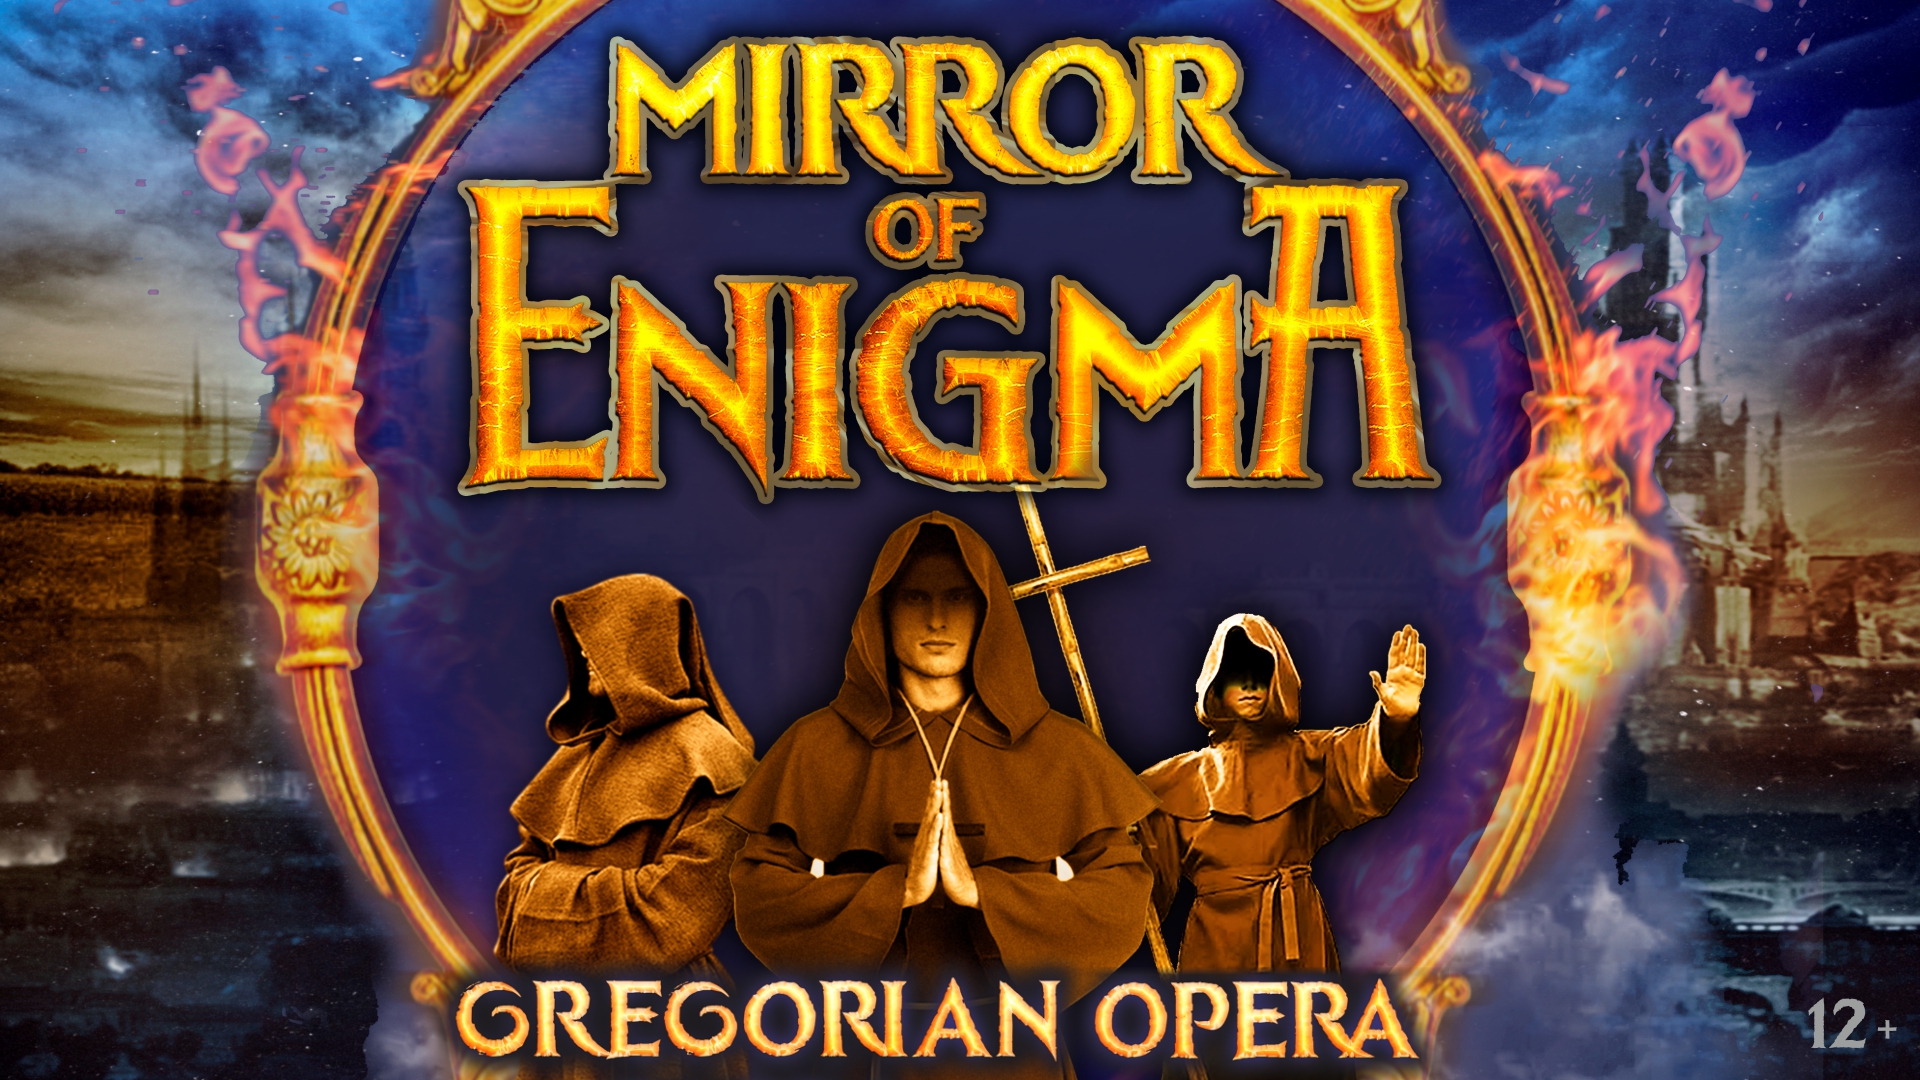 "MIRROR OF ENIGMA" GREGORIAN OPERA